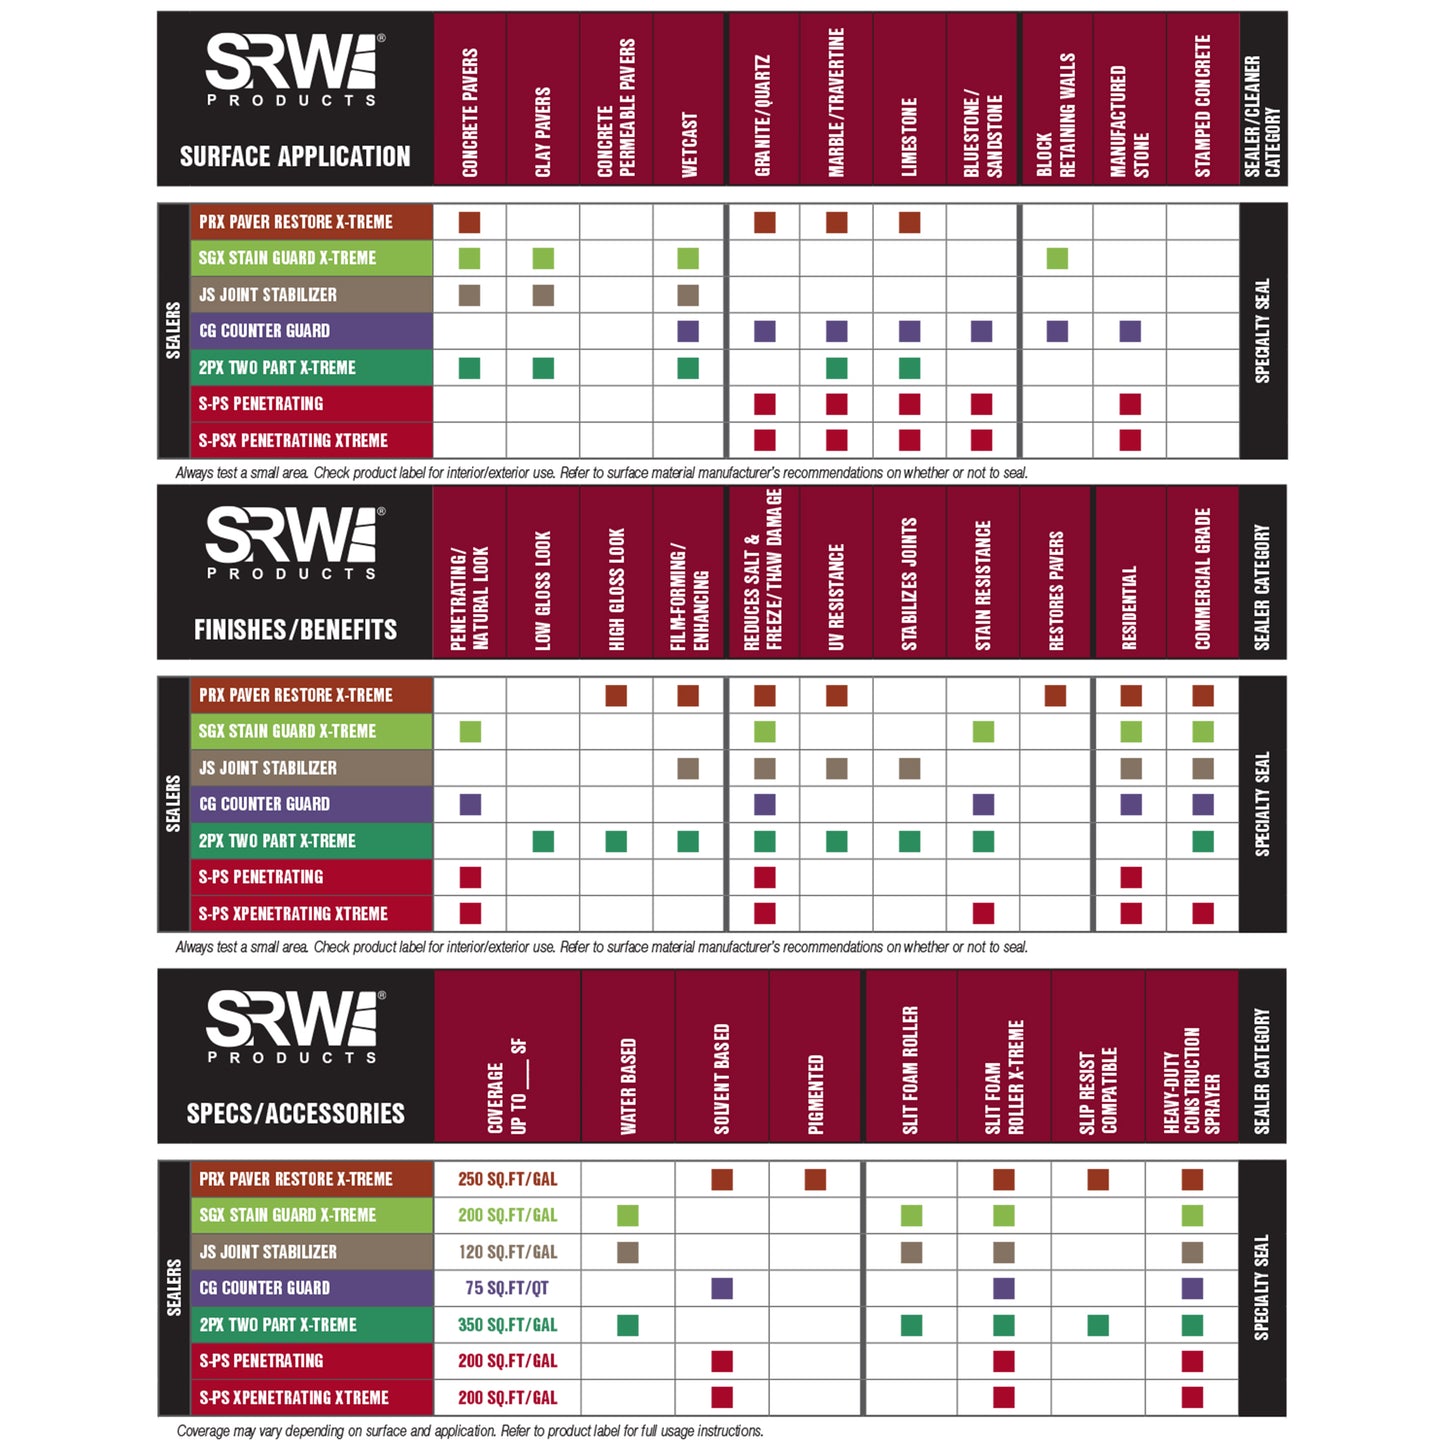 srw products breakdown chart